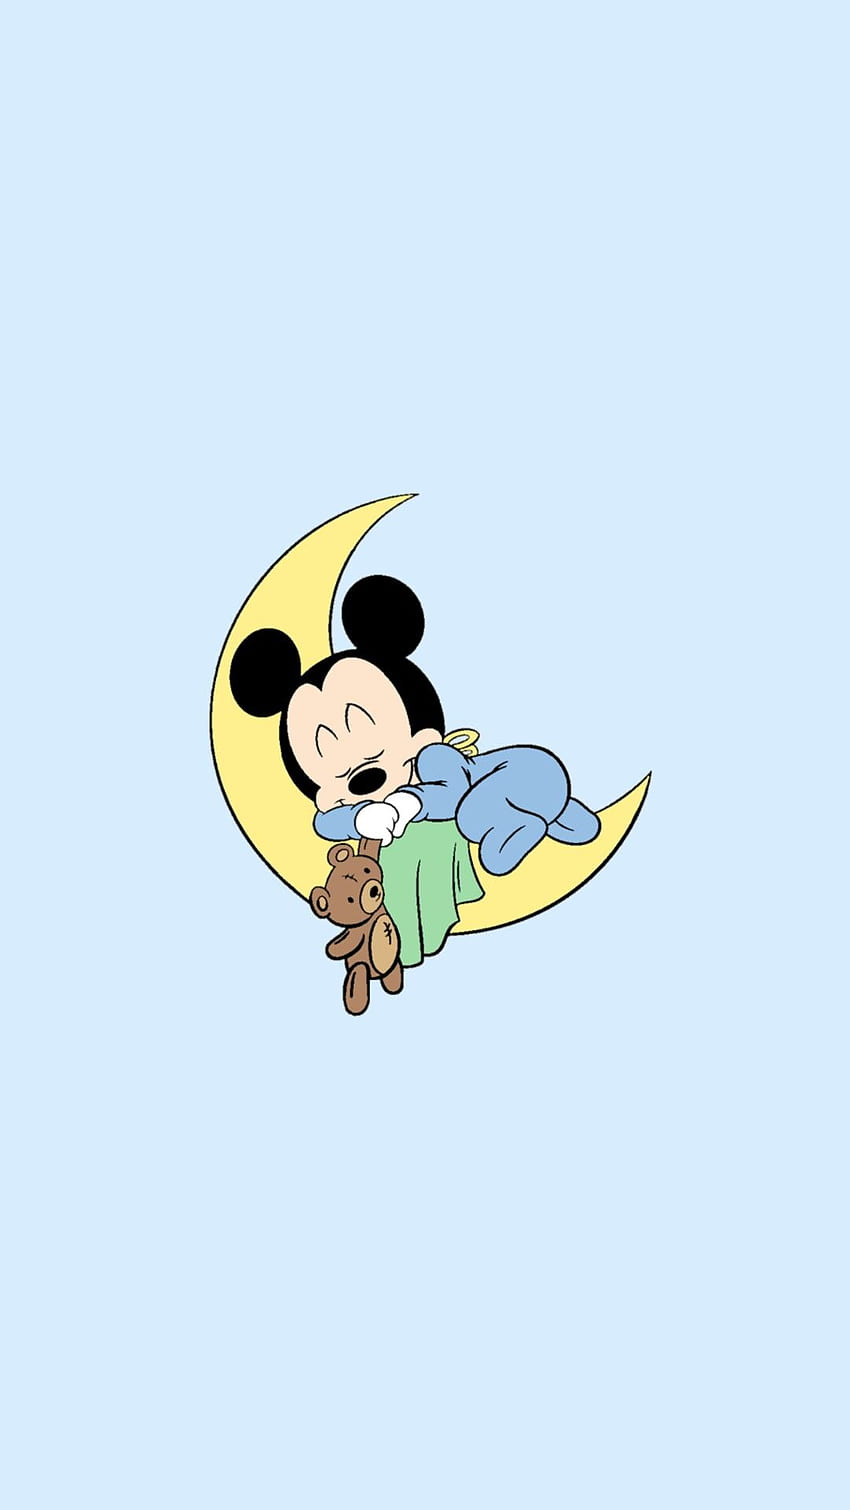 F.R on in 2020. iPhone cartoon, Cute disney , Cute cartoon, Mickey ...